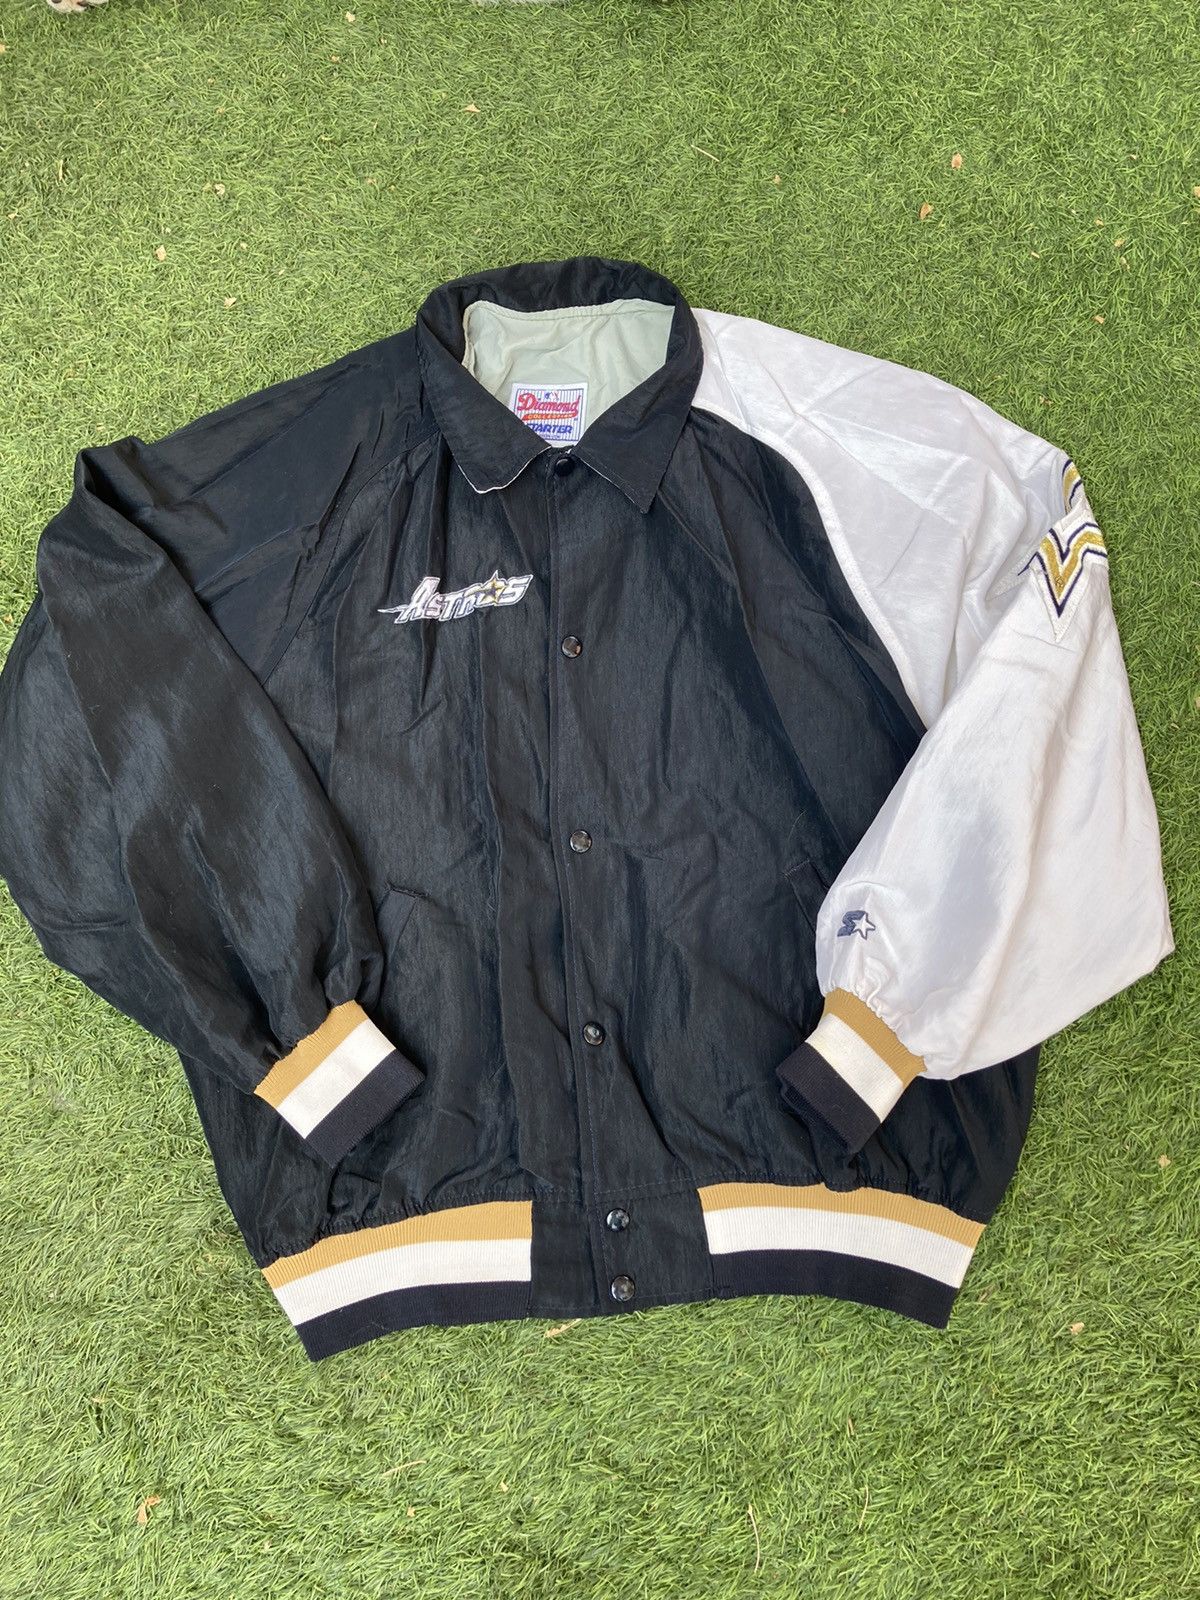 STARTER, Jackets & Coats, Rare Vintage Houston Astros 8s Starter Jacket